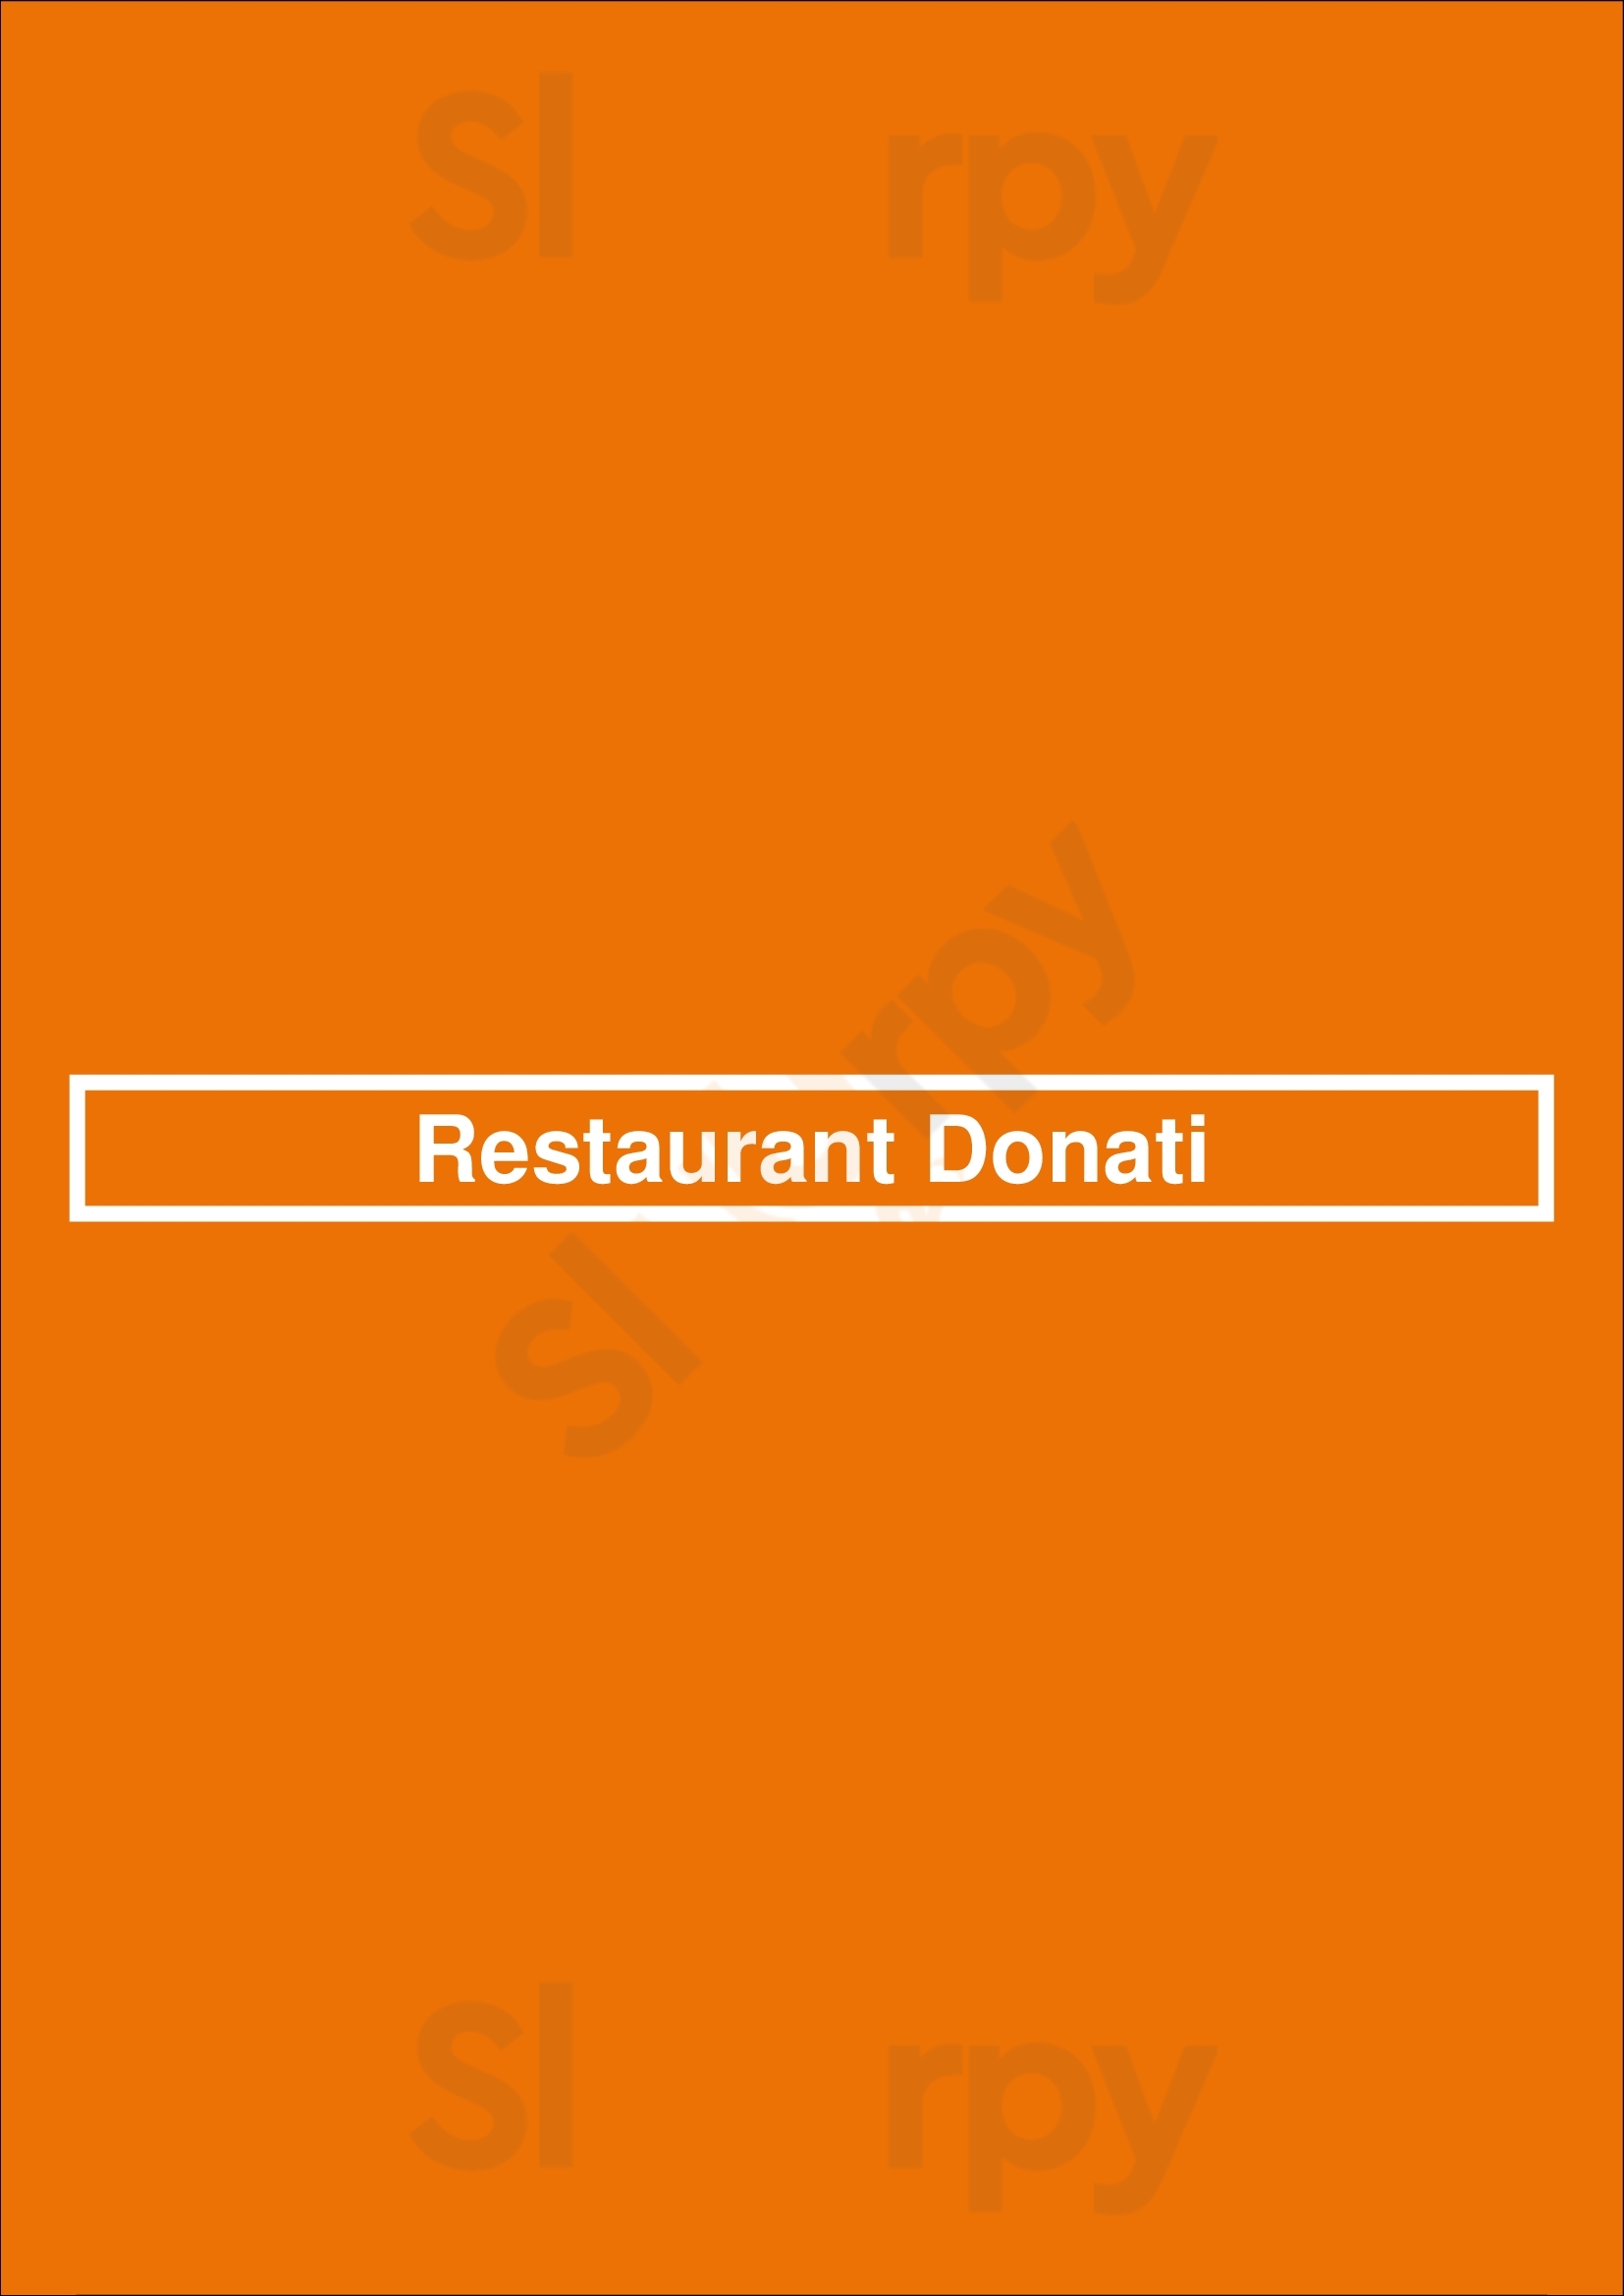 Restaurant Donati Voorburg Menu - 1